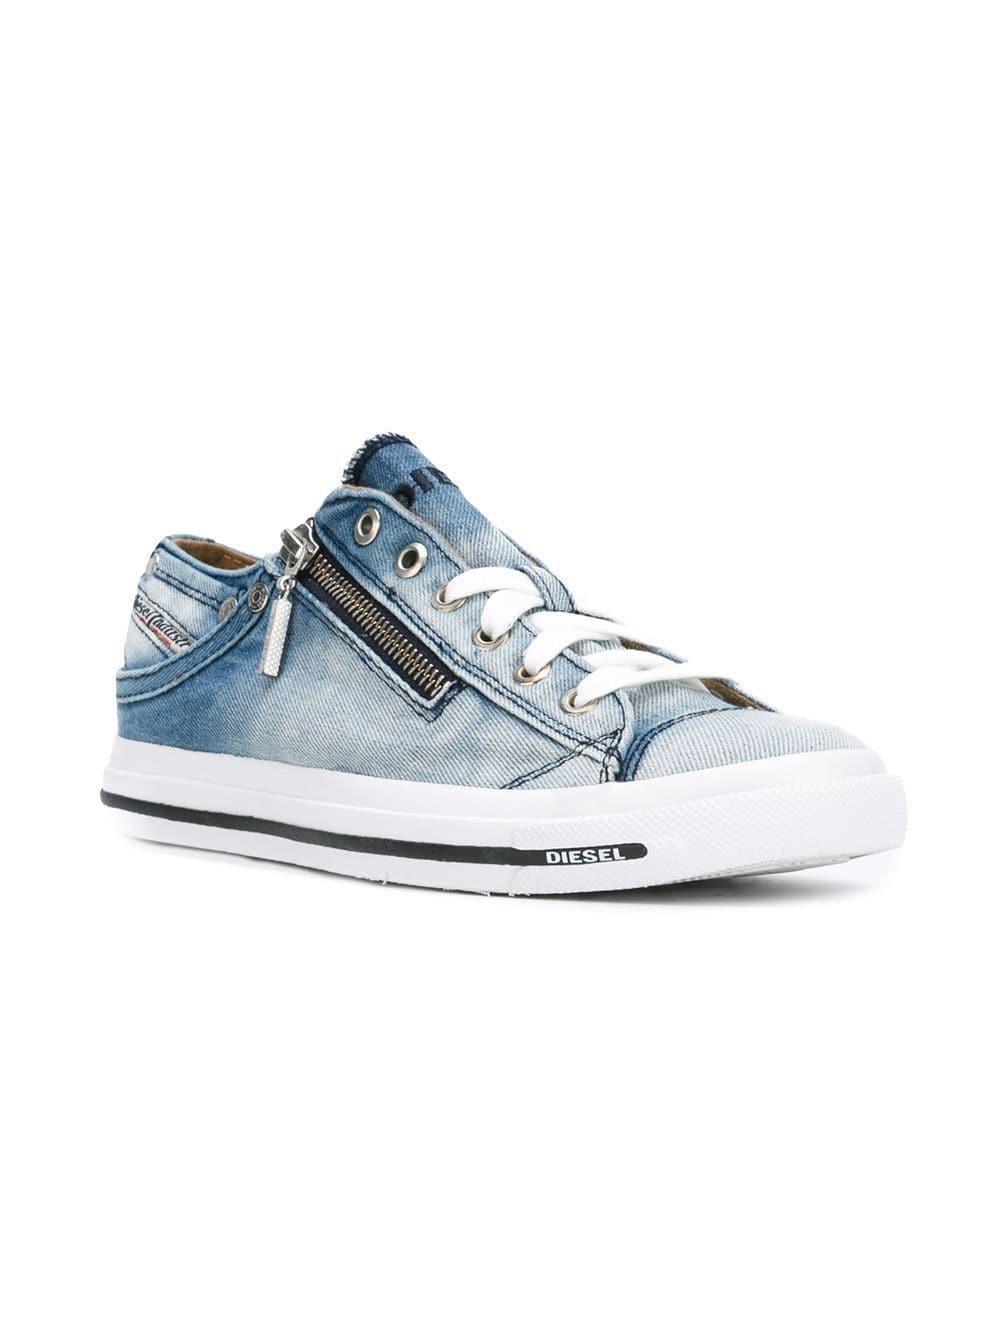 DIESEL Denim Lace Up Sneakers in Blue | Lyst